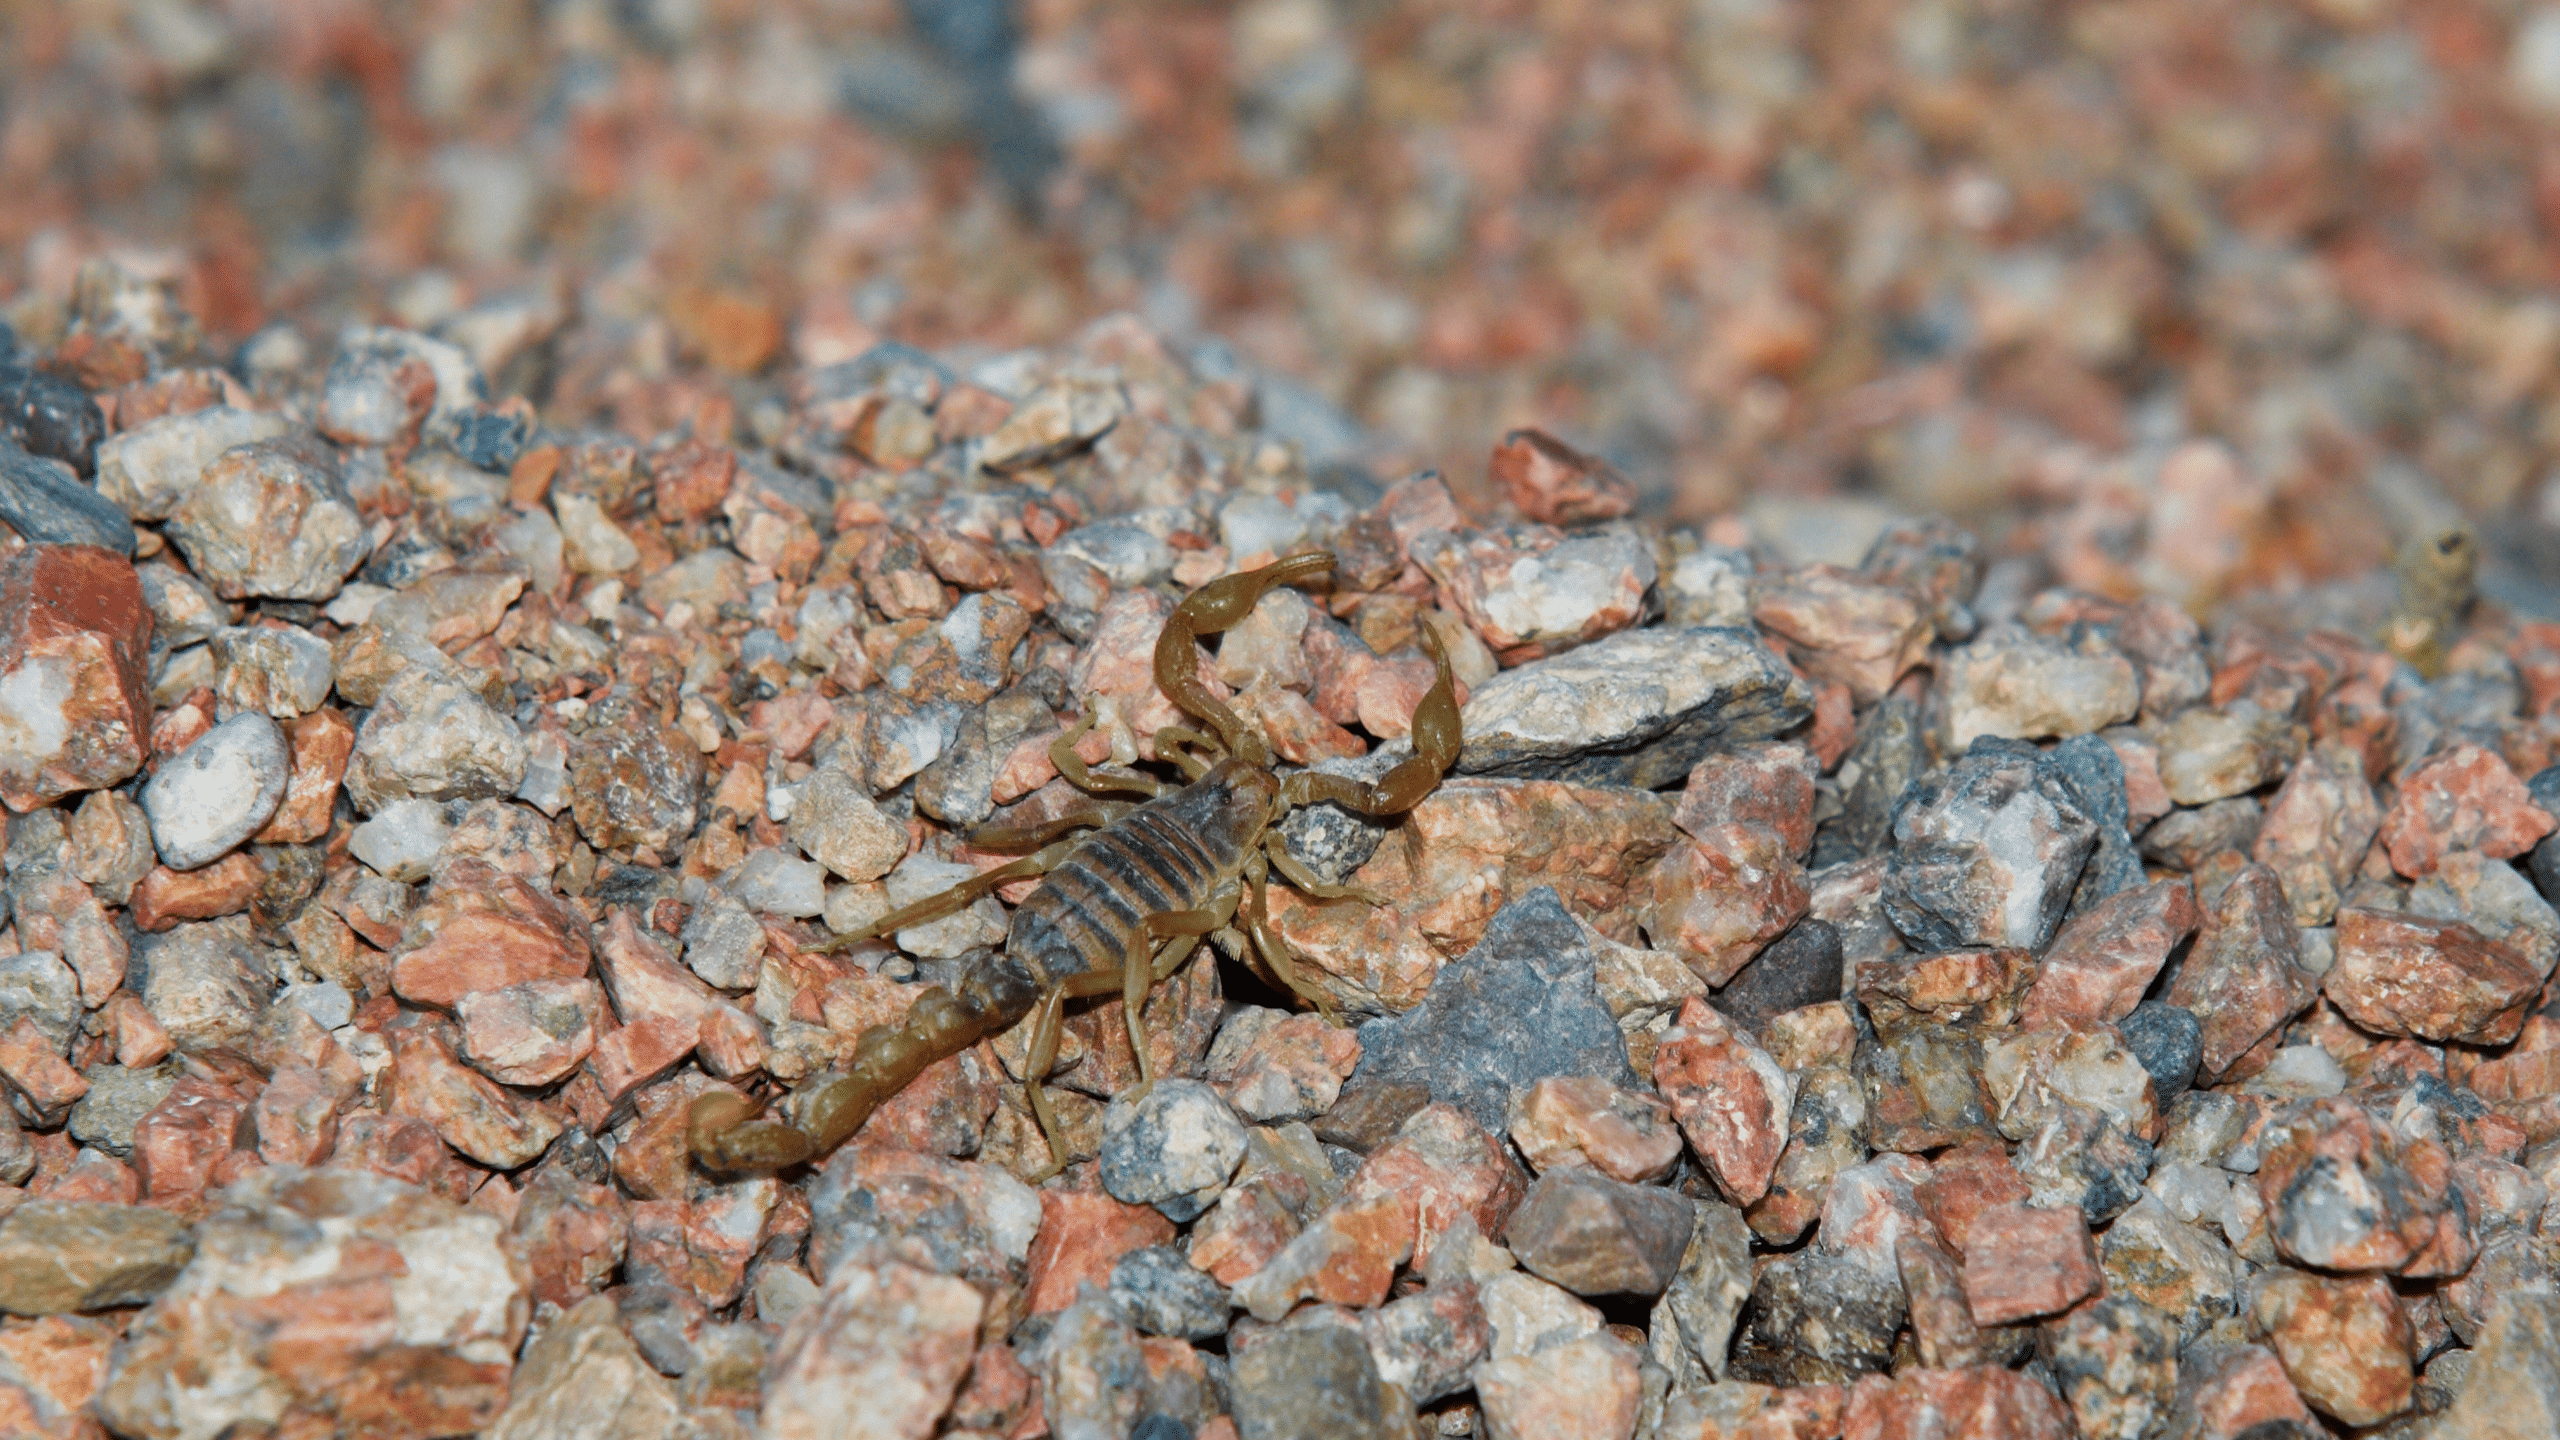 close up of scorpion